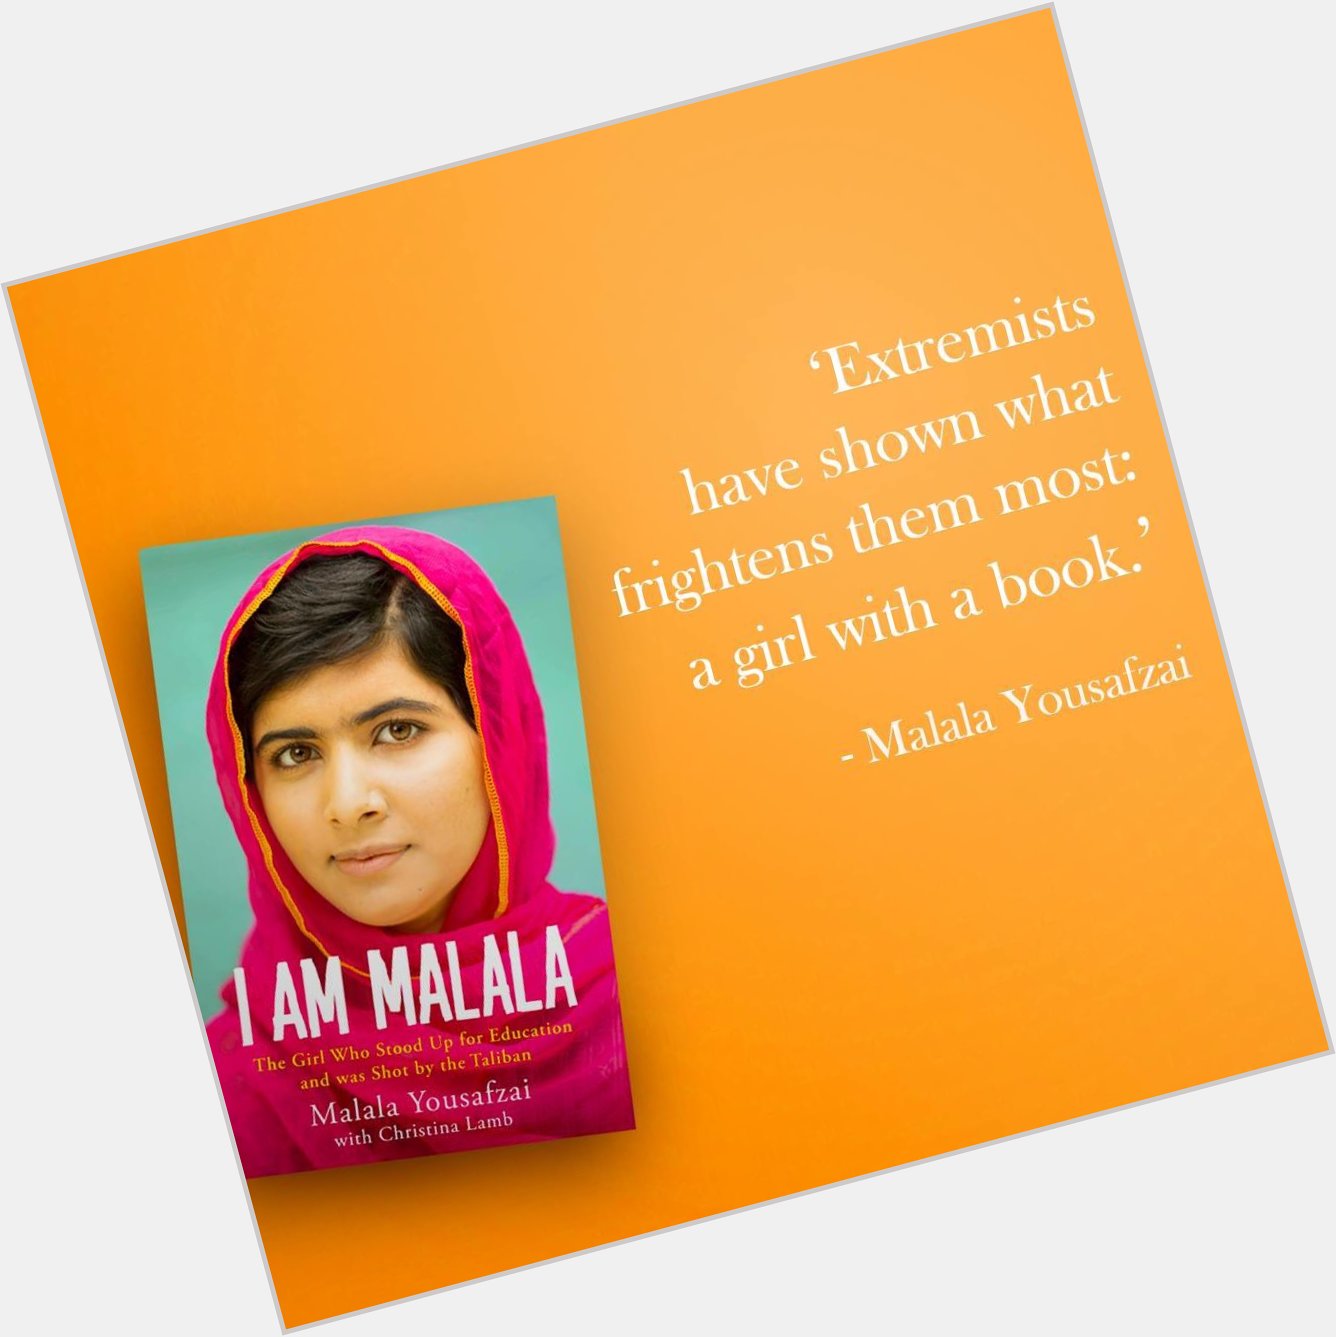 Happy birthday to Malala Yousafzai, born on this day in Mingora, Pakistan in 1997 